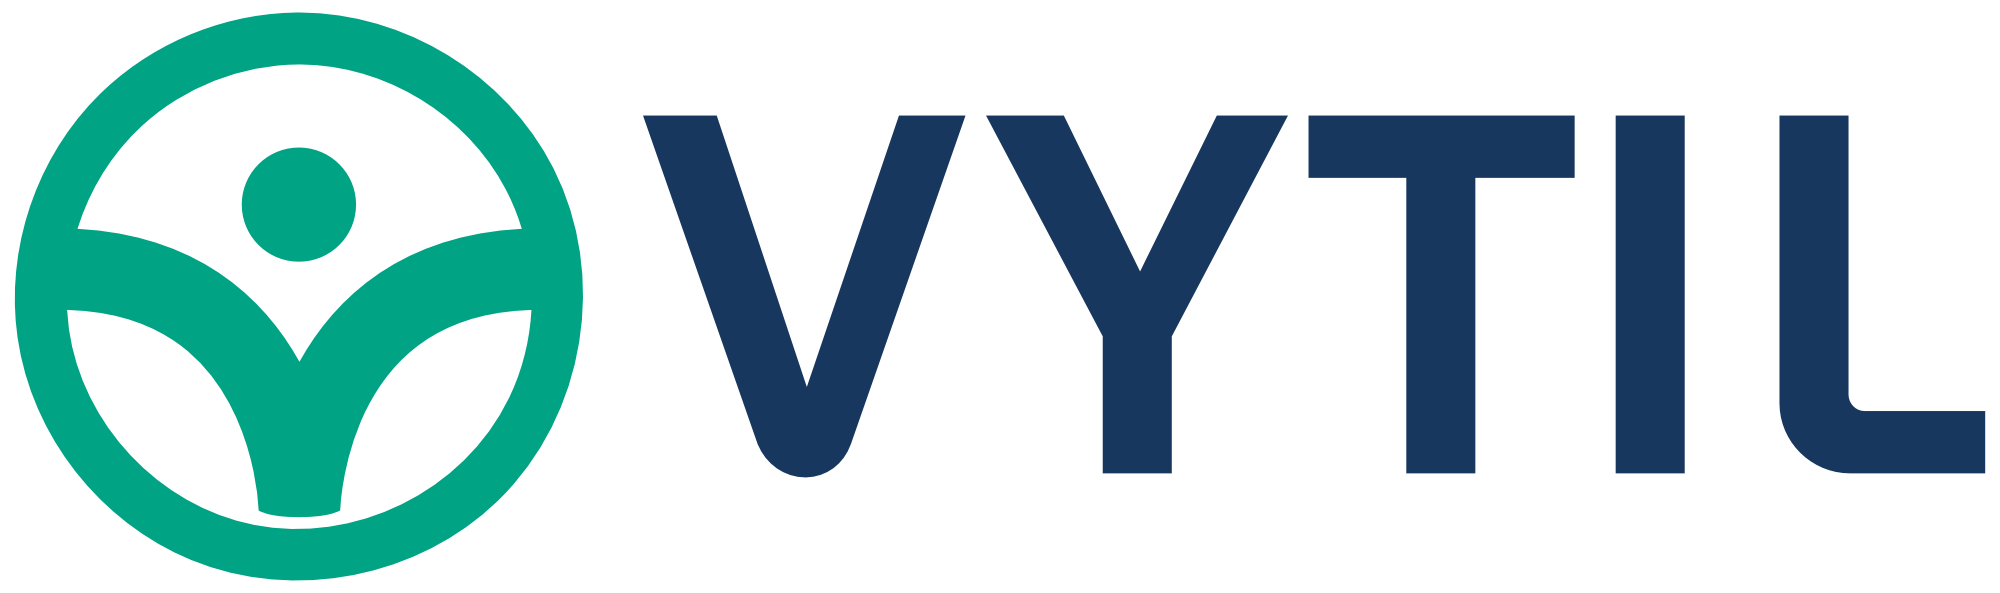 VYTIL logo